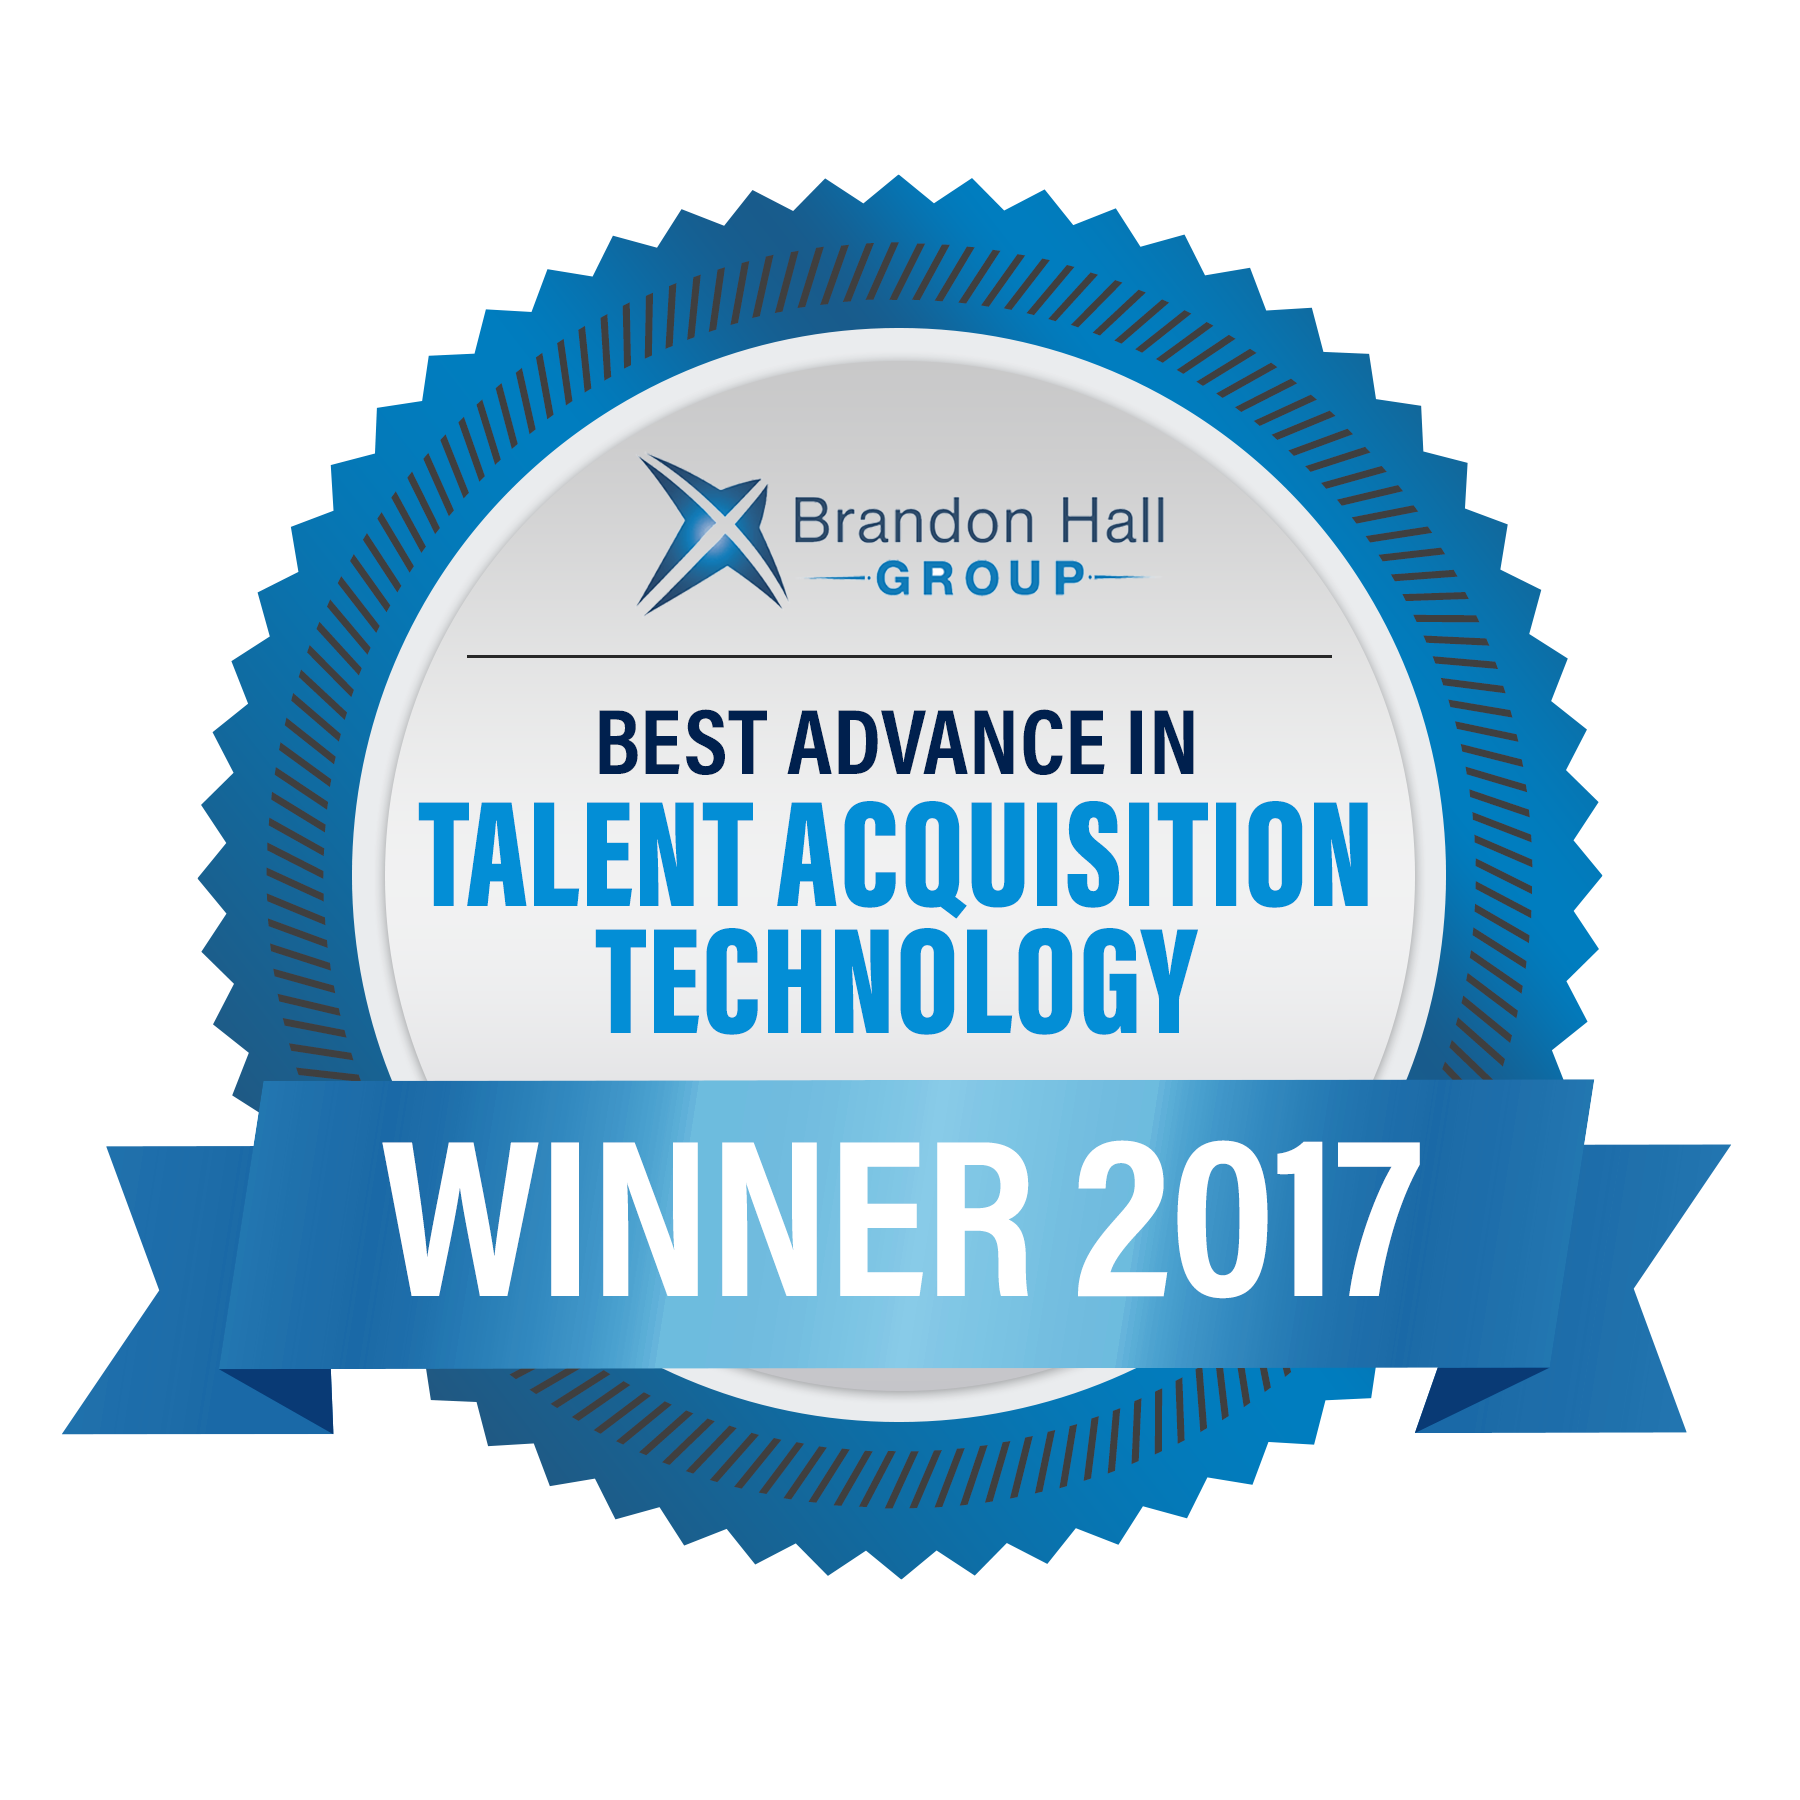 Winner 2017 Best Advance in Talent Acquisition Technology